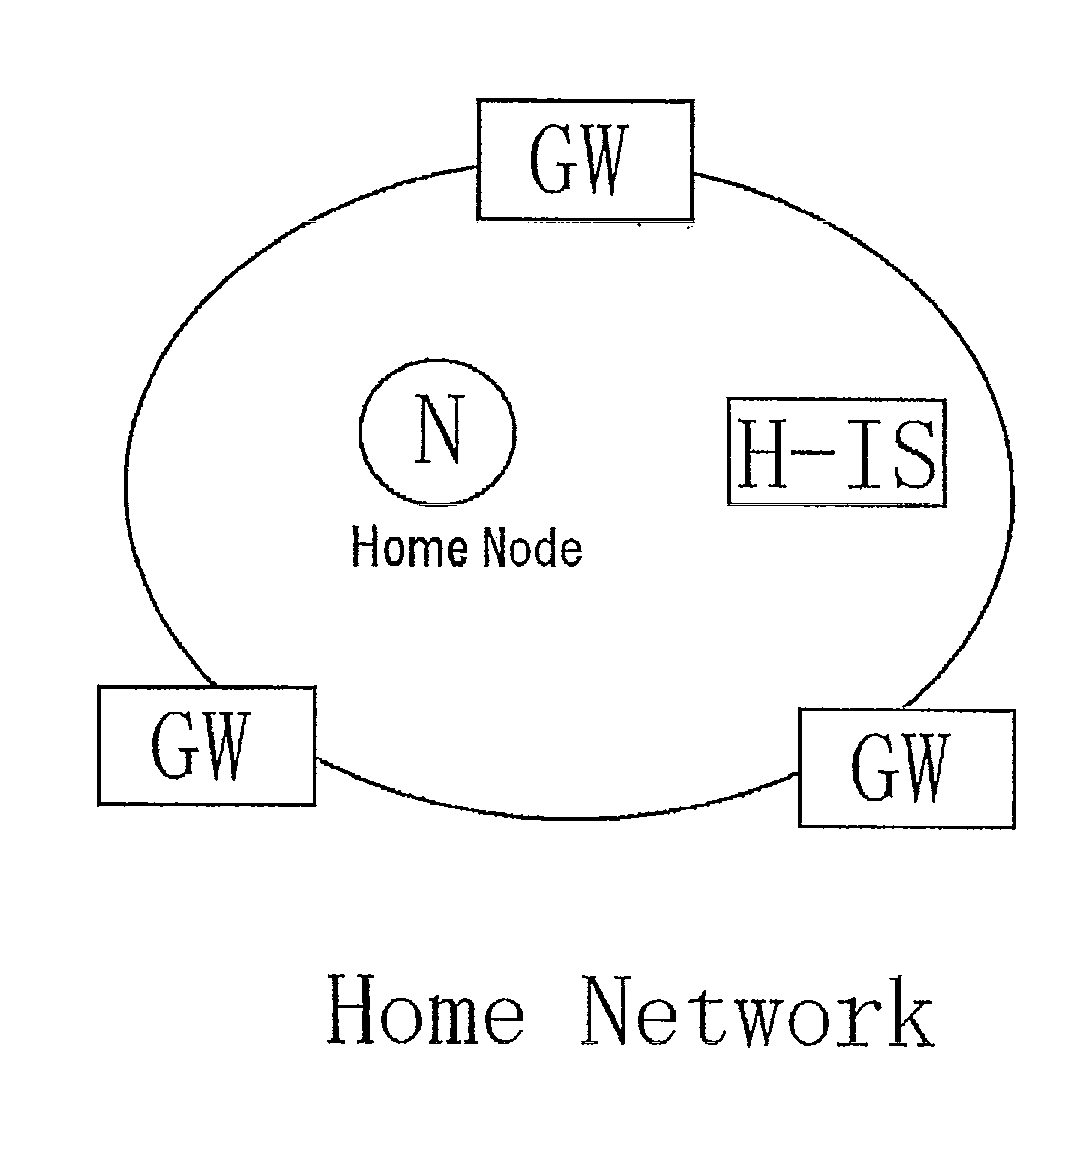 Packet communication method using node identifier and locator